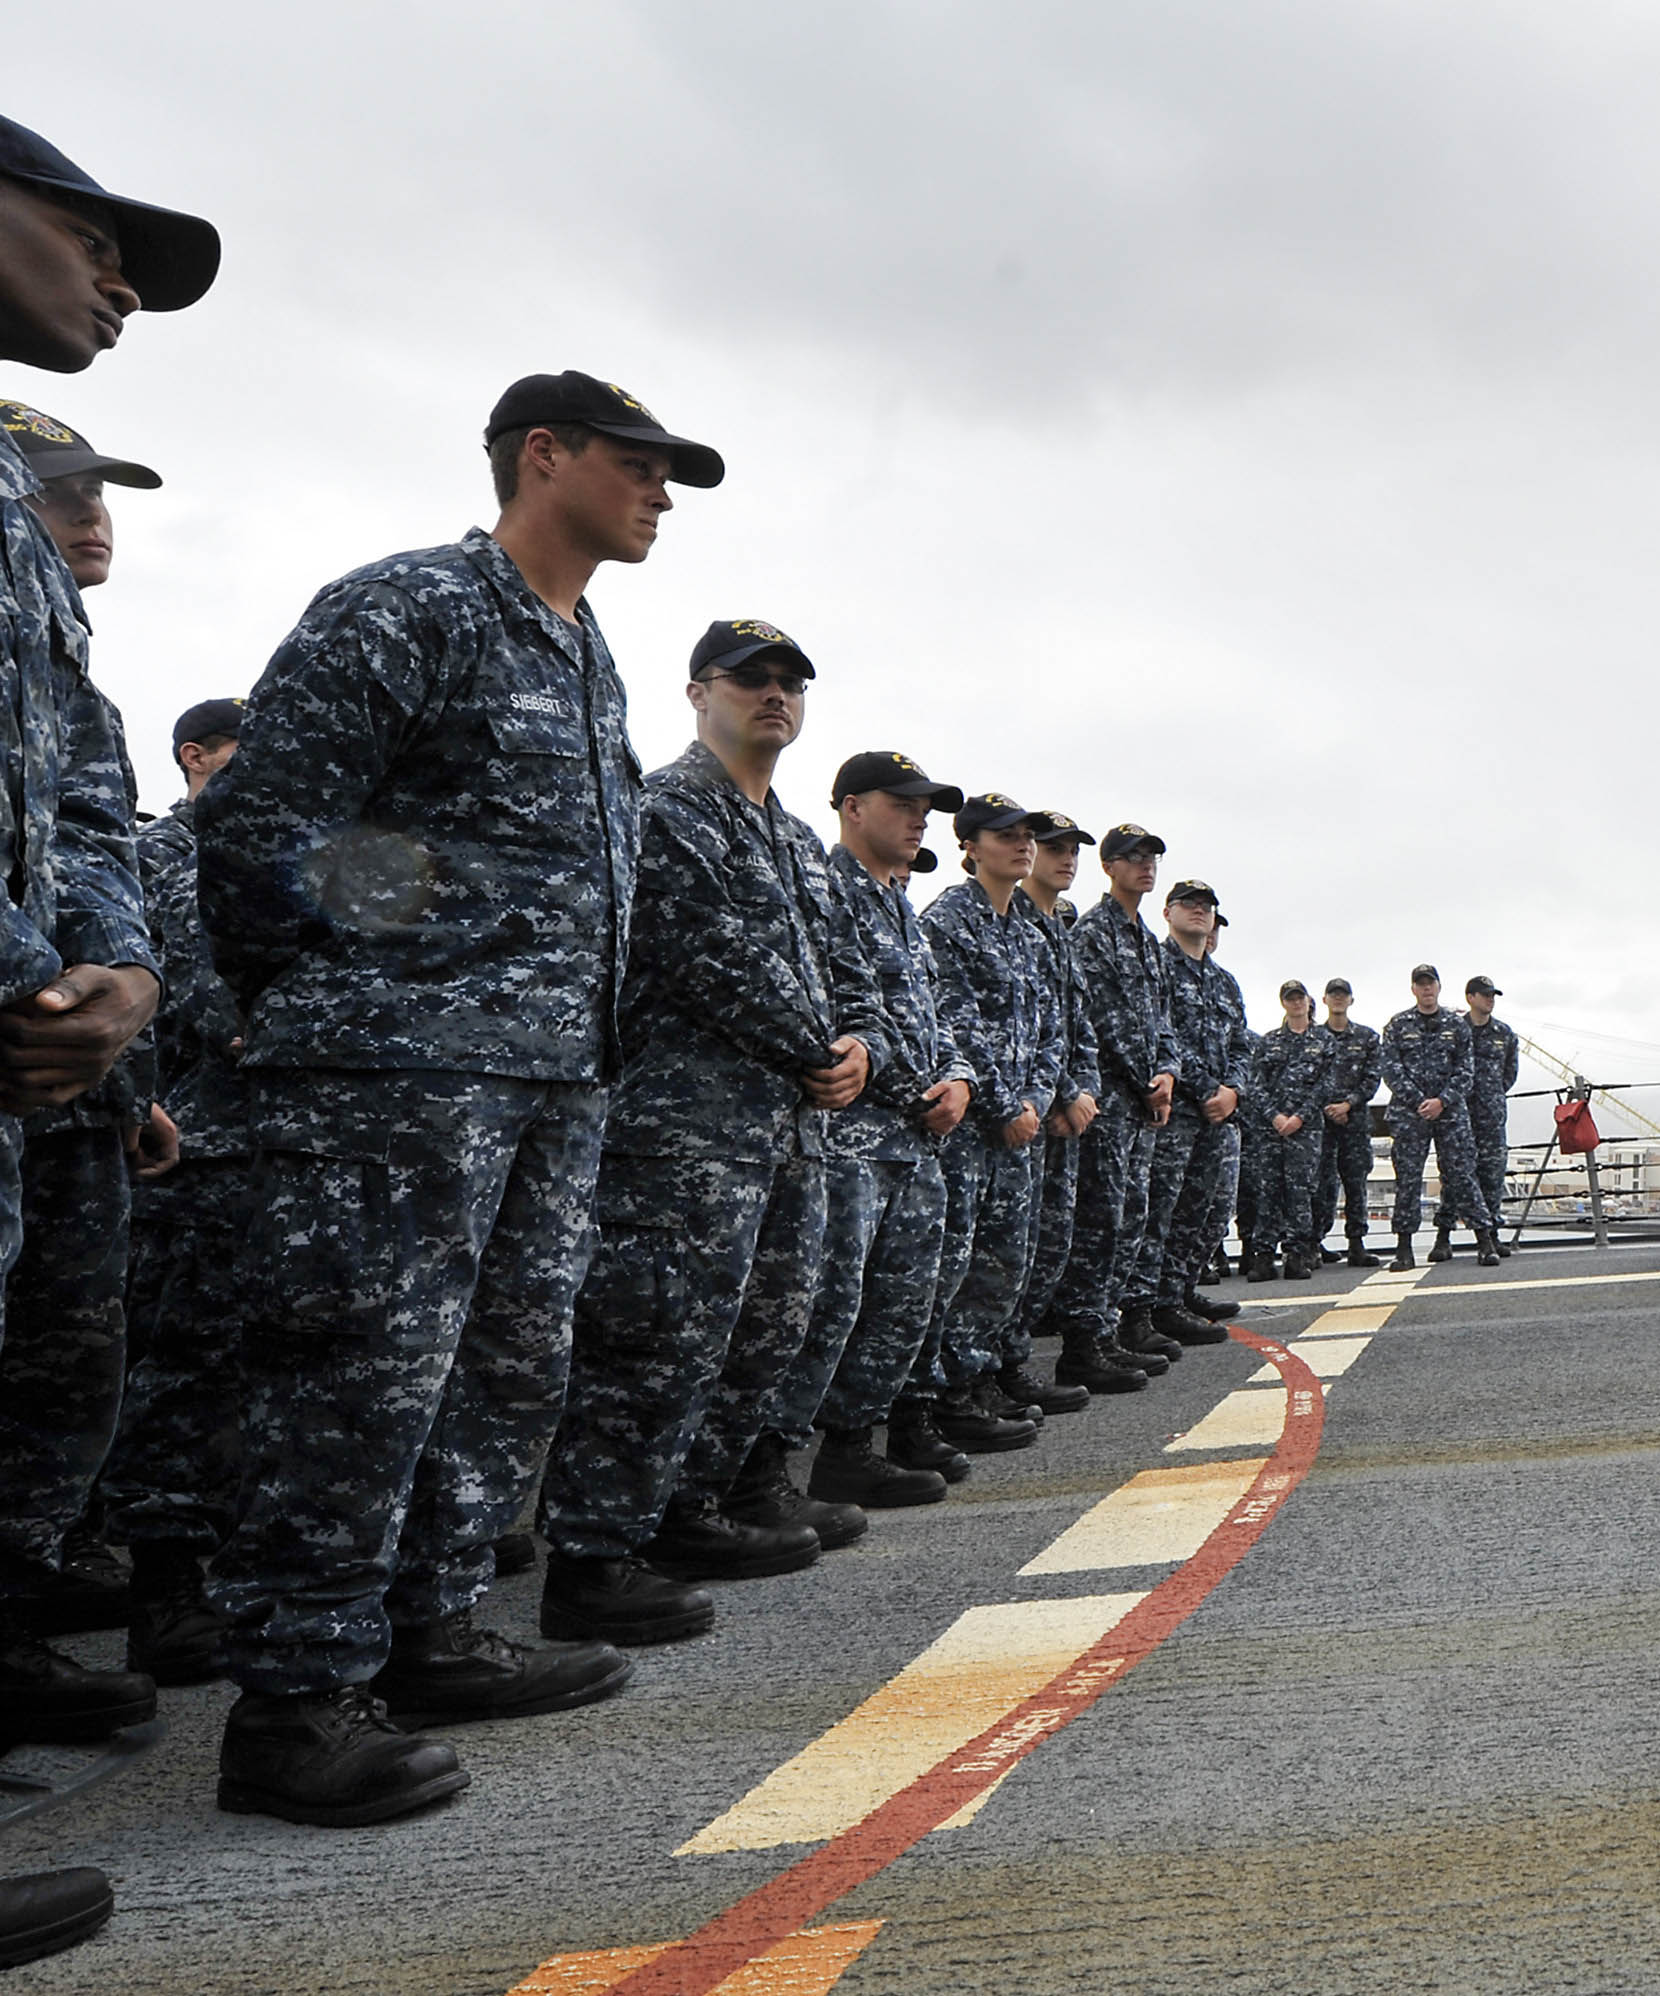 US Navy Digital Blue Camouflage Uniform Size Medium Regular Top